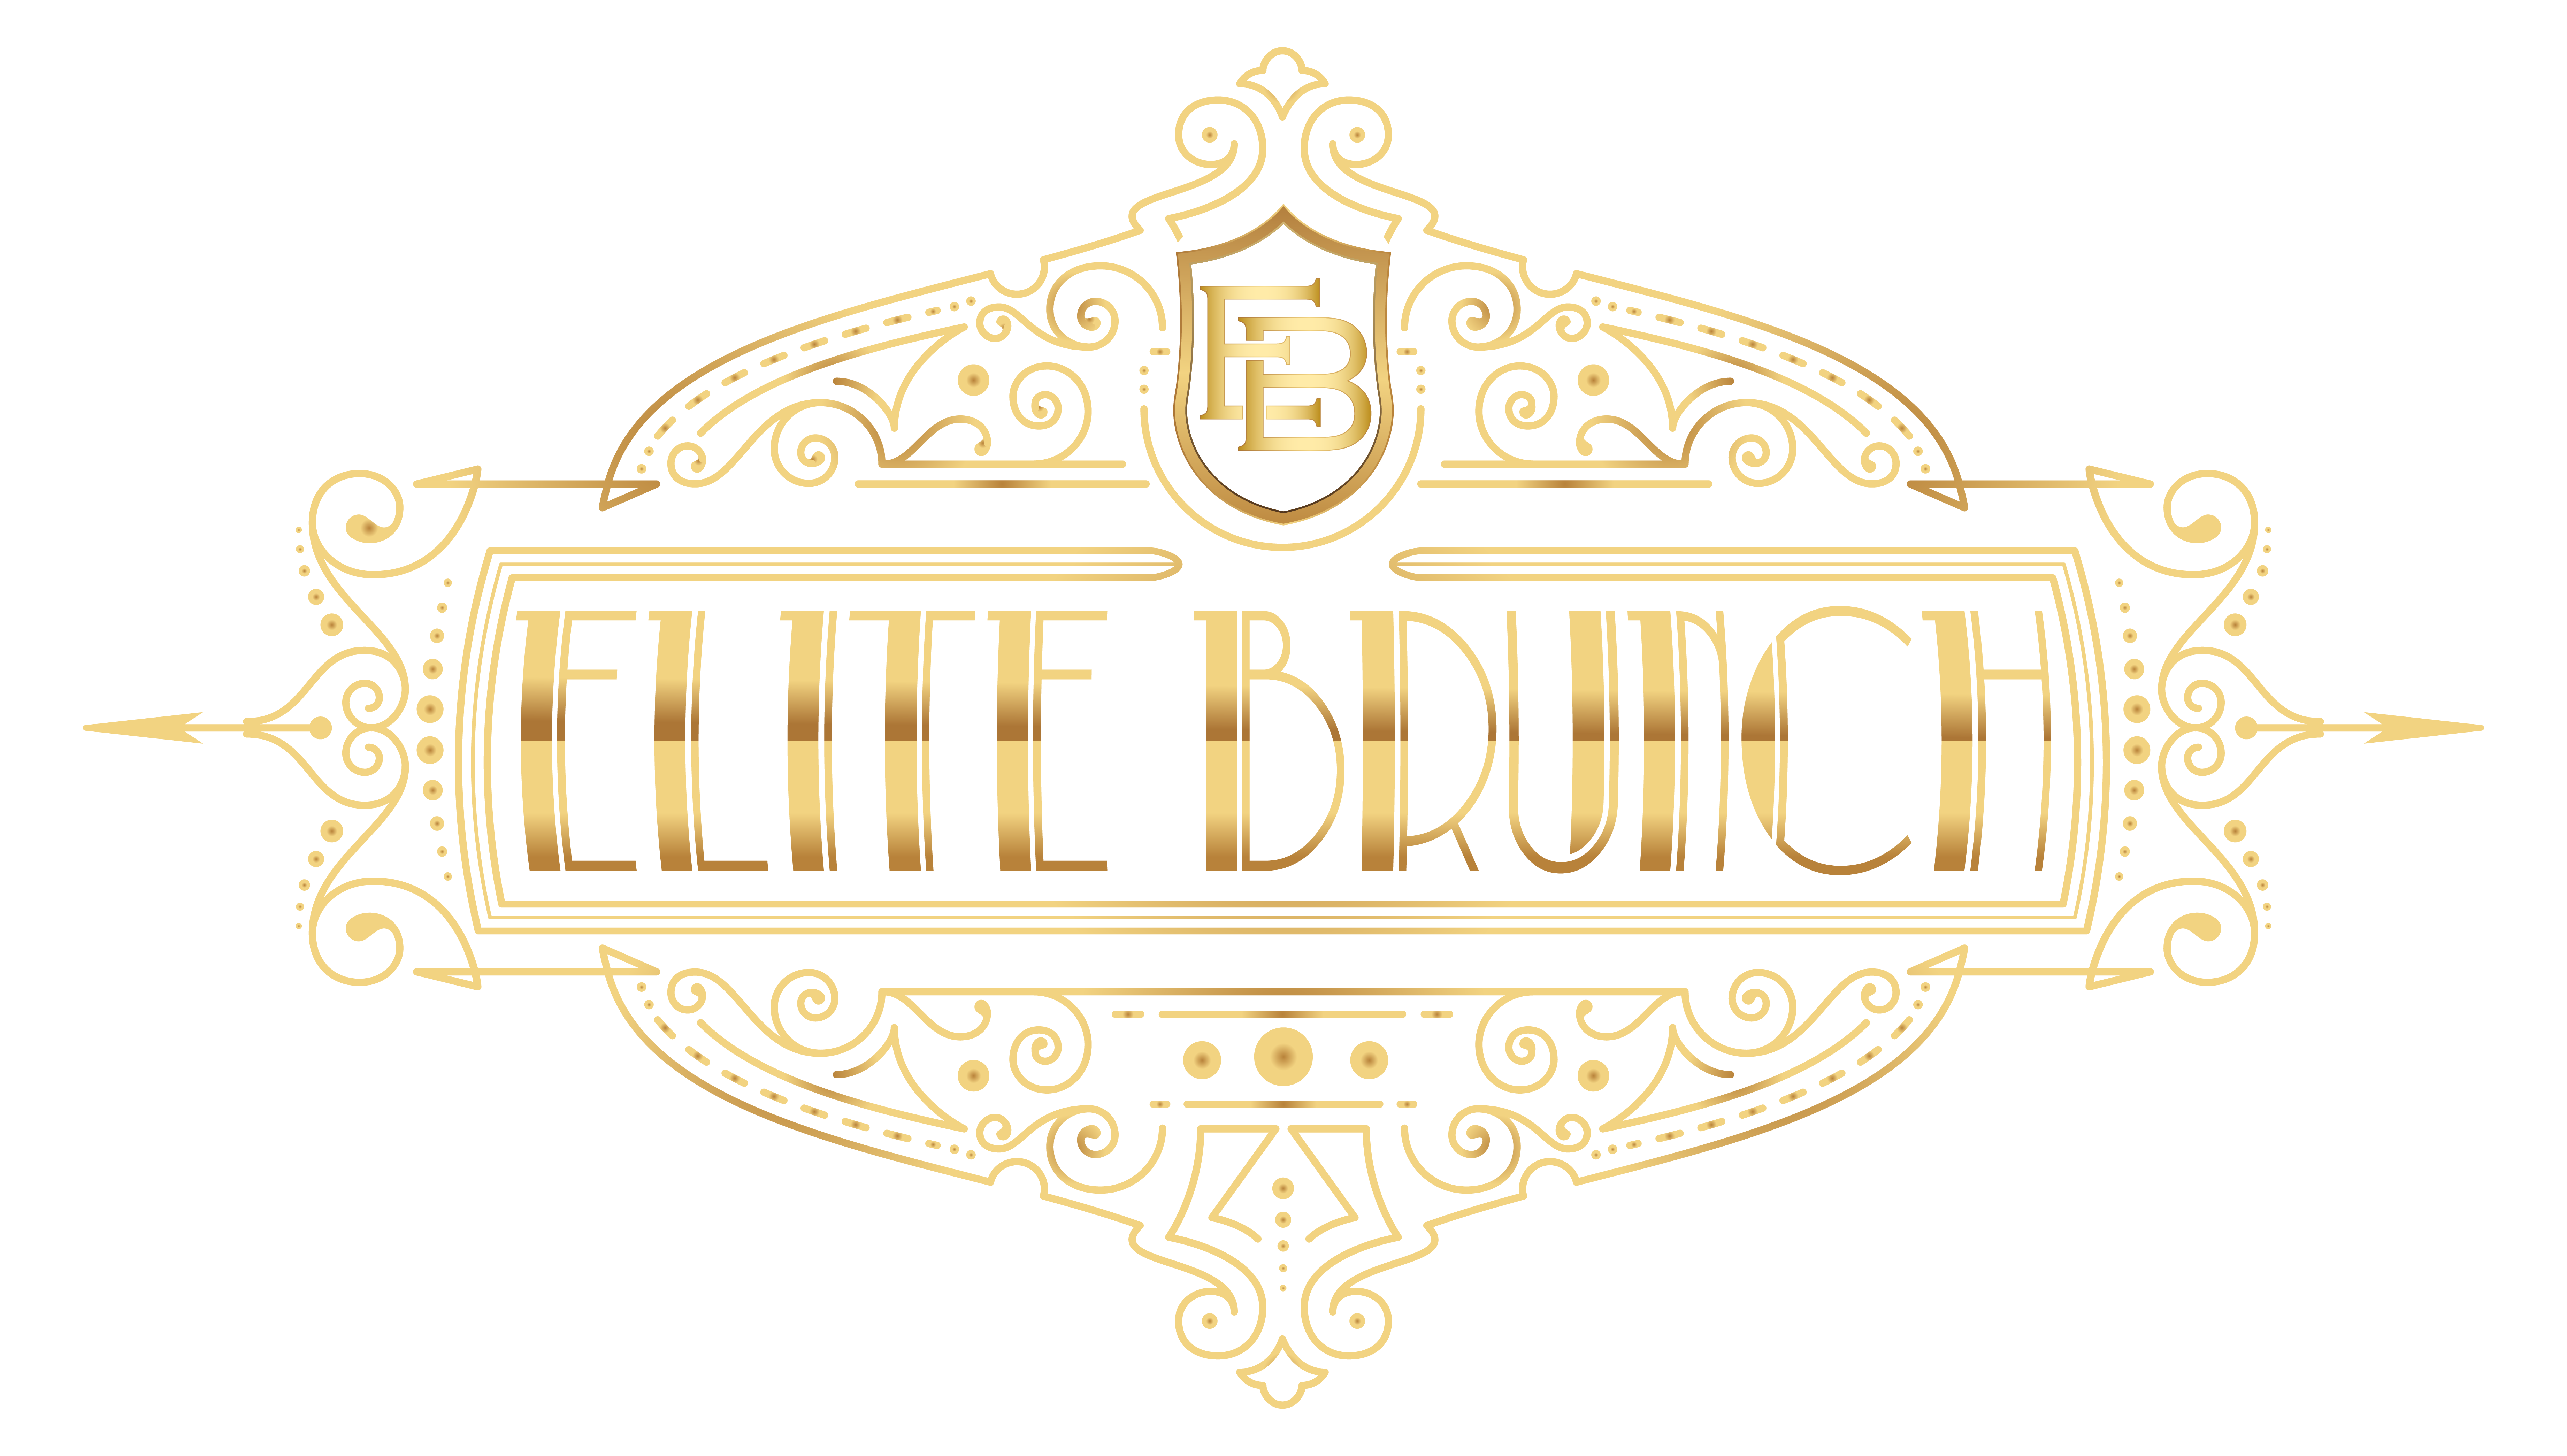 ELITE BRUNCH logo